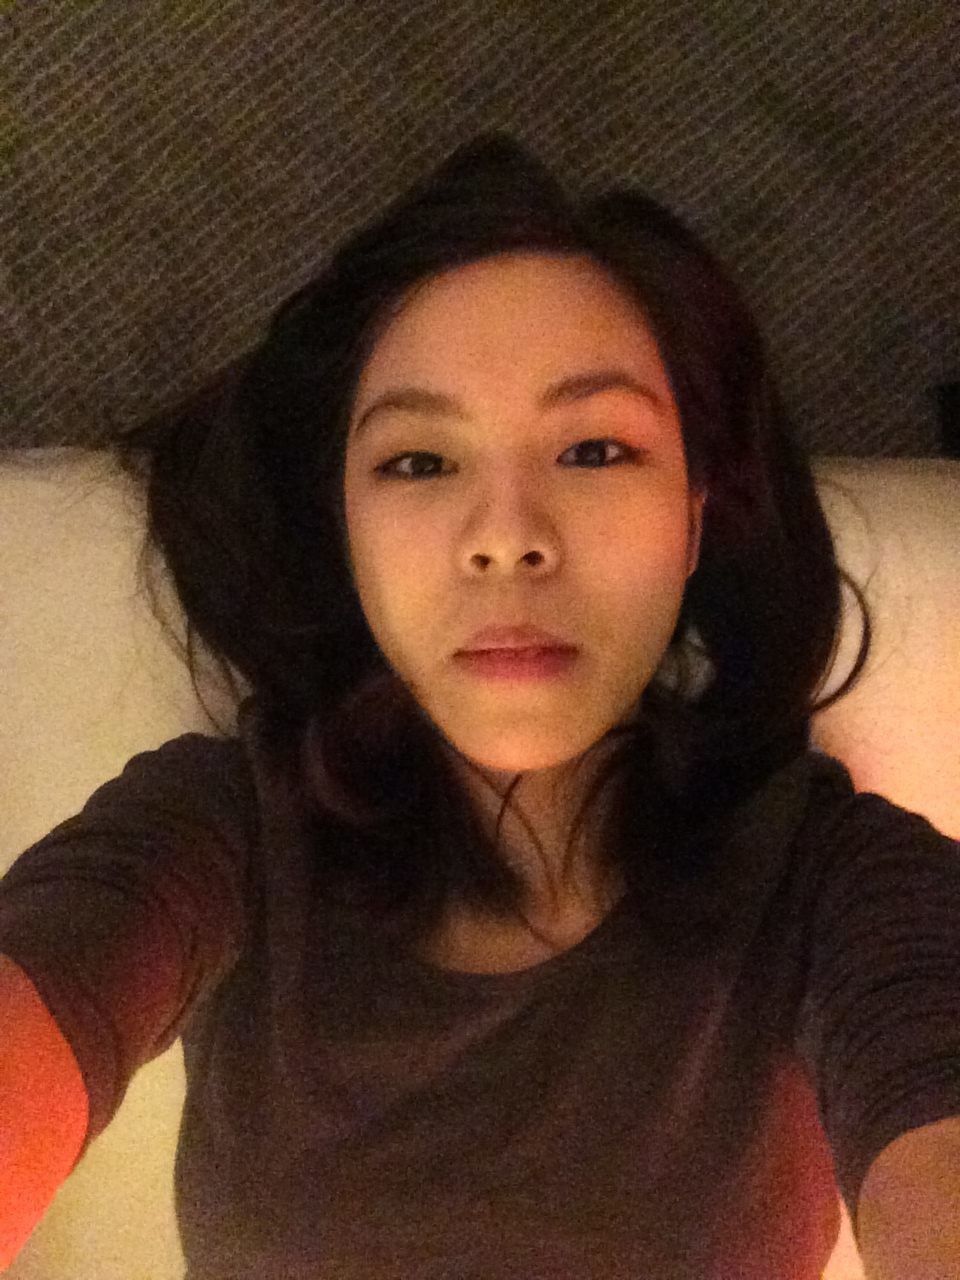 Singapore Claudia Takes Selfies